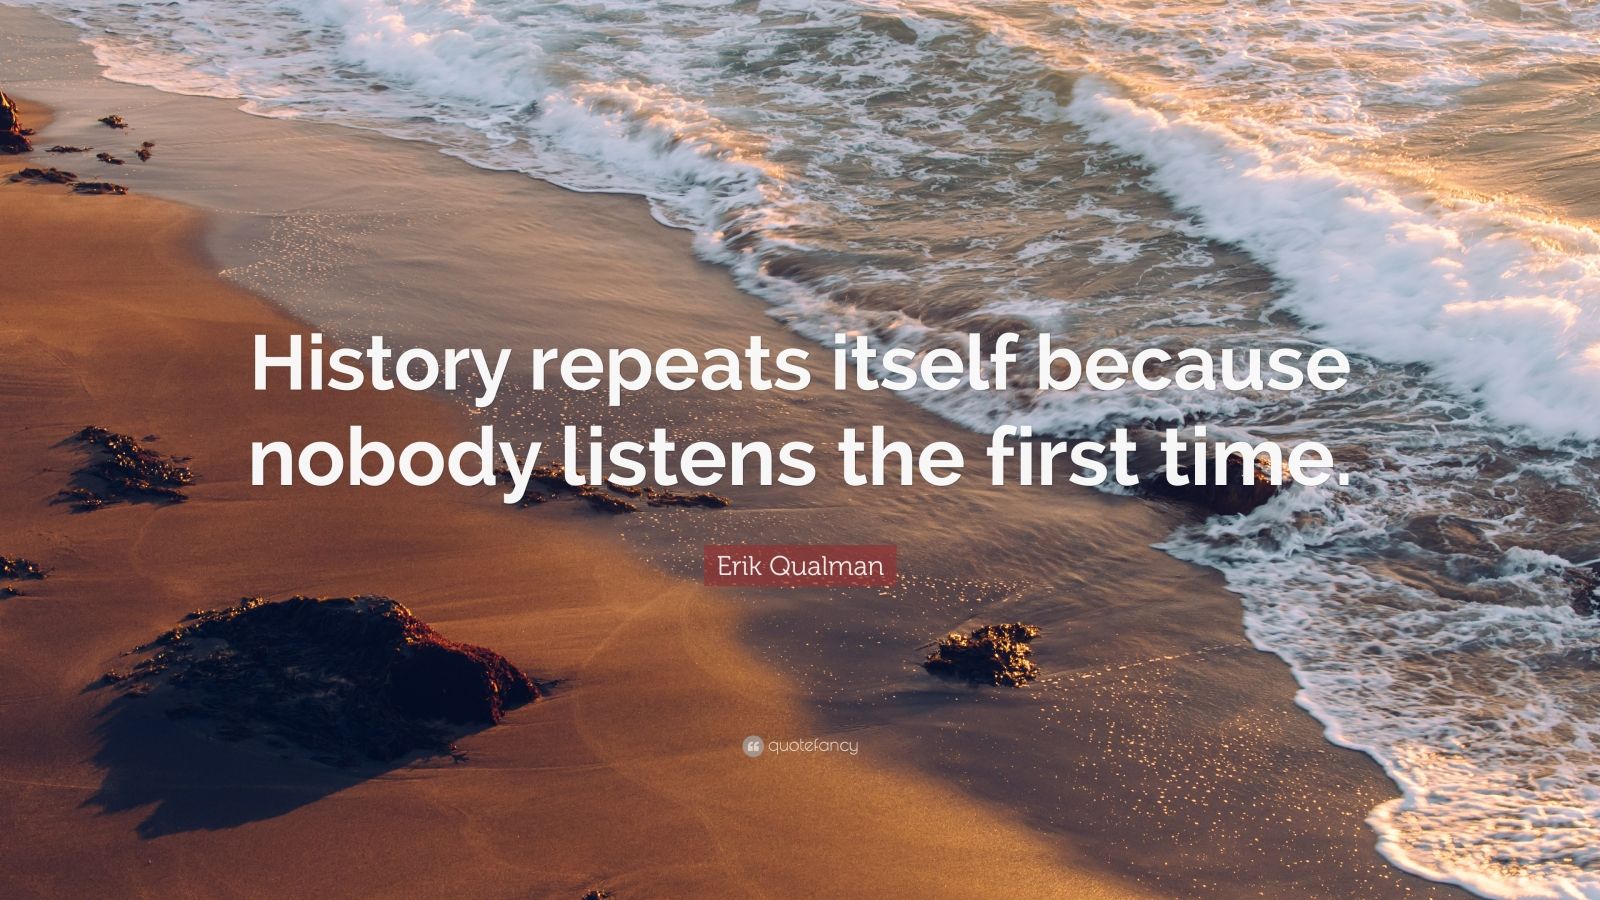 Erik Qualman Quote “History repeats itself because nobody listens the